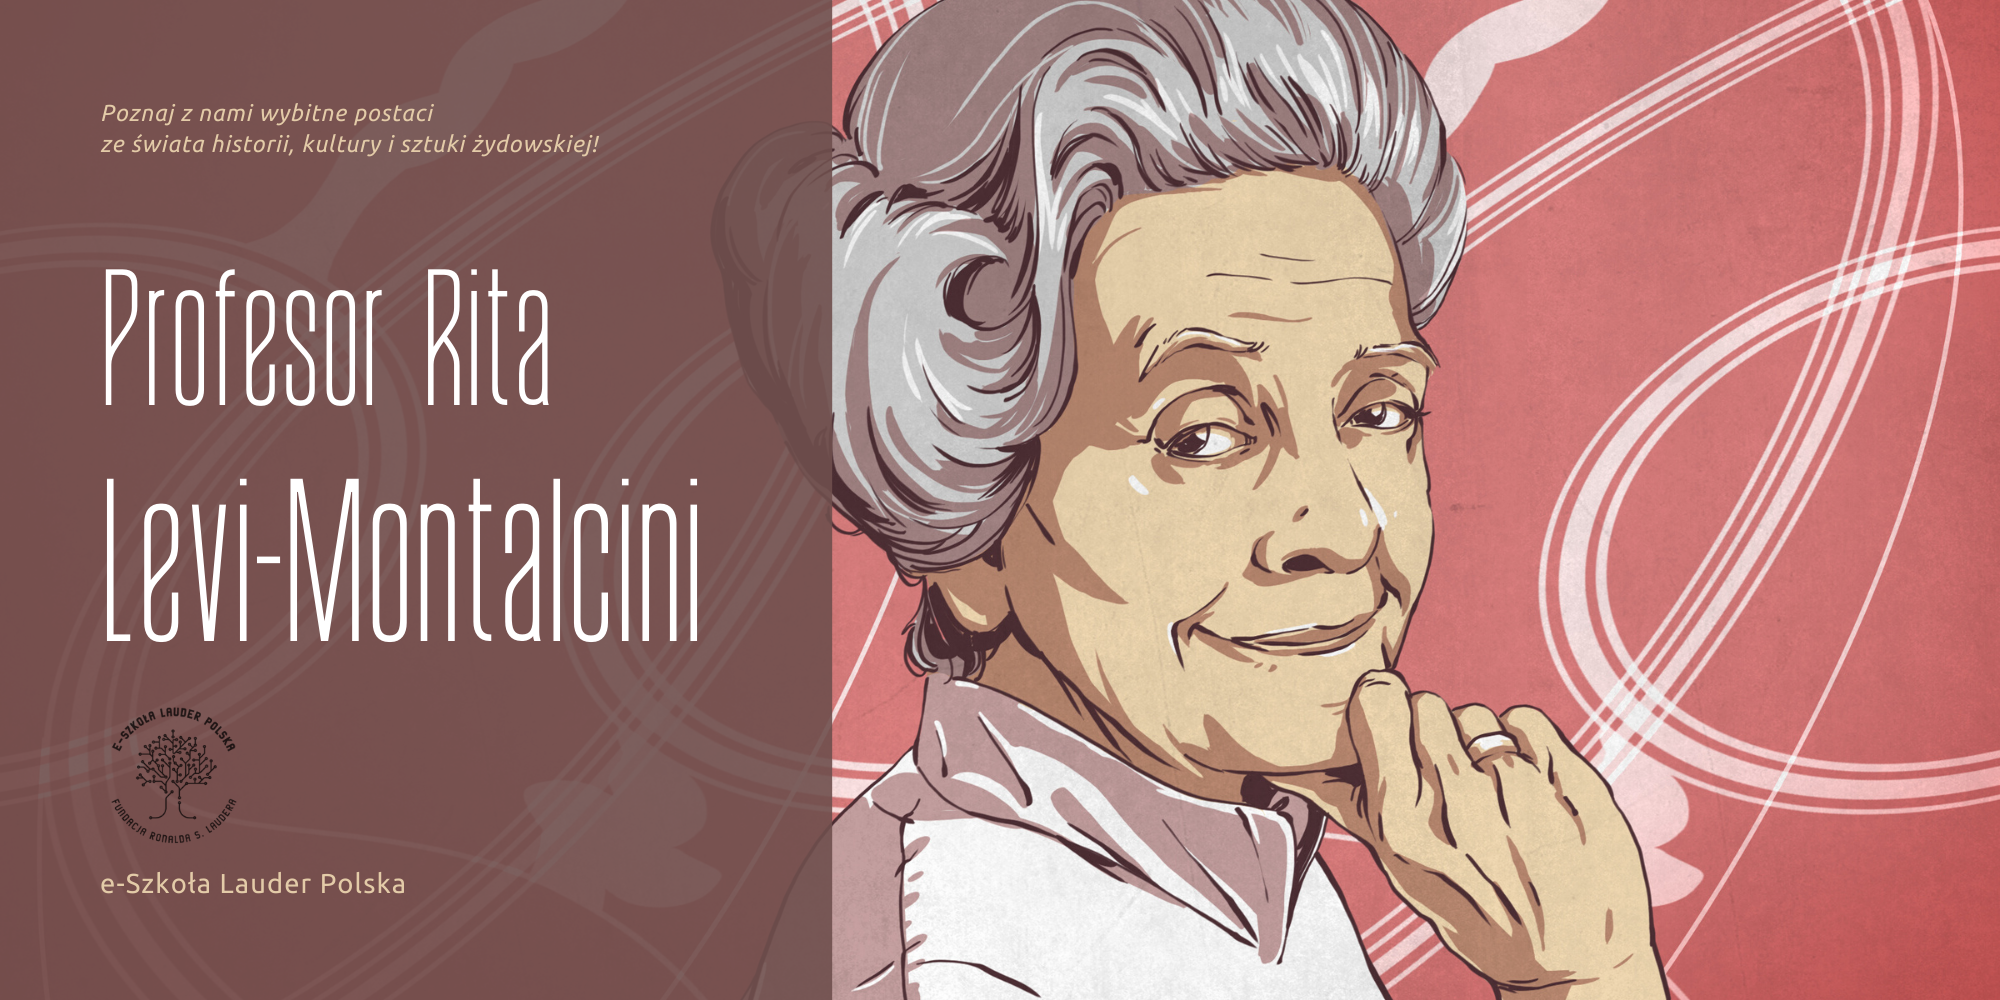 Rita Levi – Montalcini: neurobiolożka i laureatka Nagrody Nobla